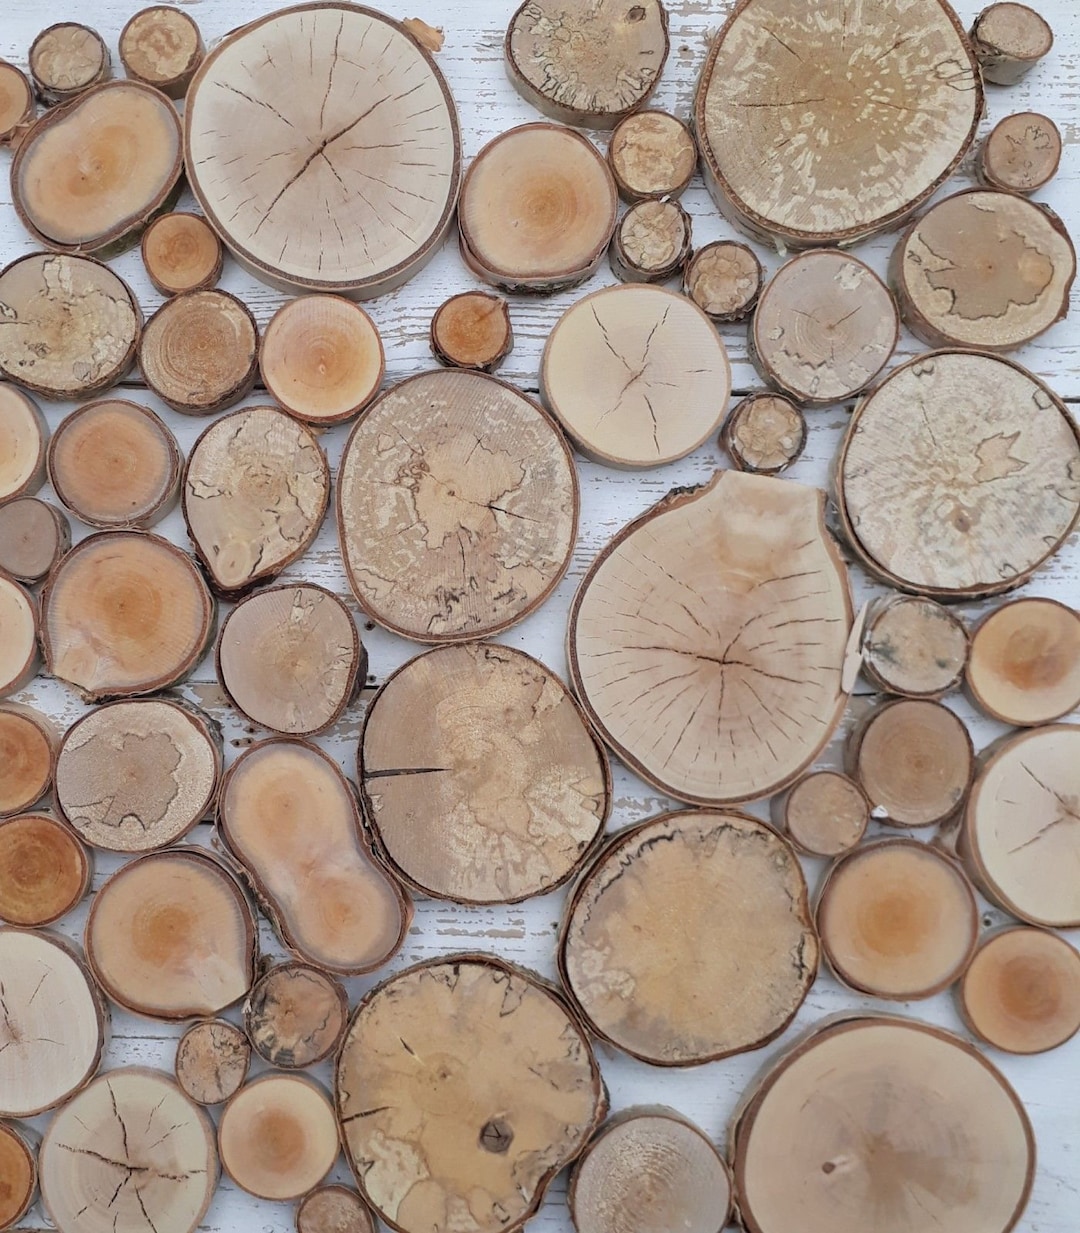 Wooden Slices LOCAL WOOD 1-100pcs 2-20cm Craft Decor Log Coasters